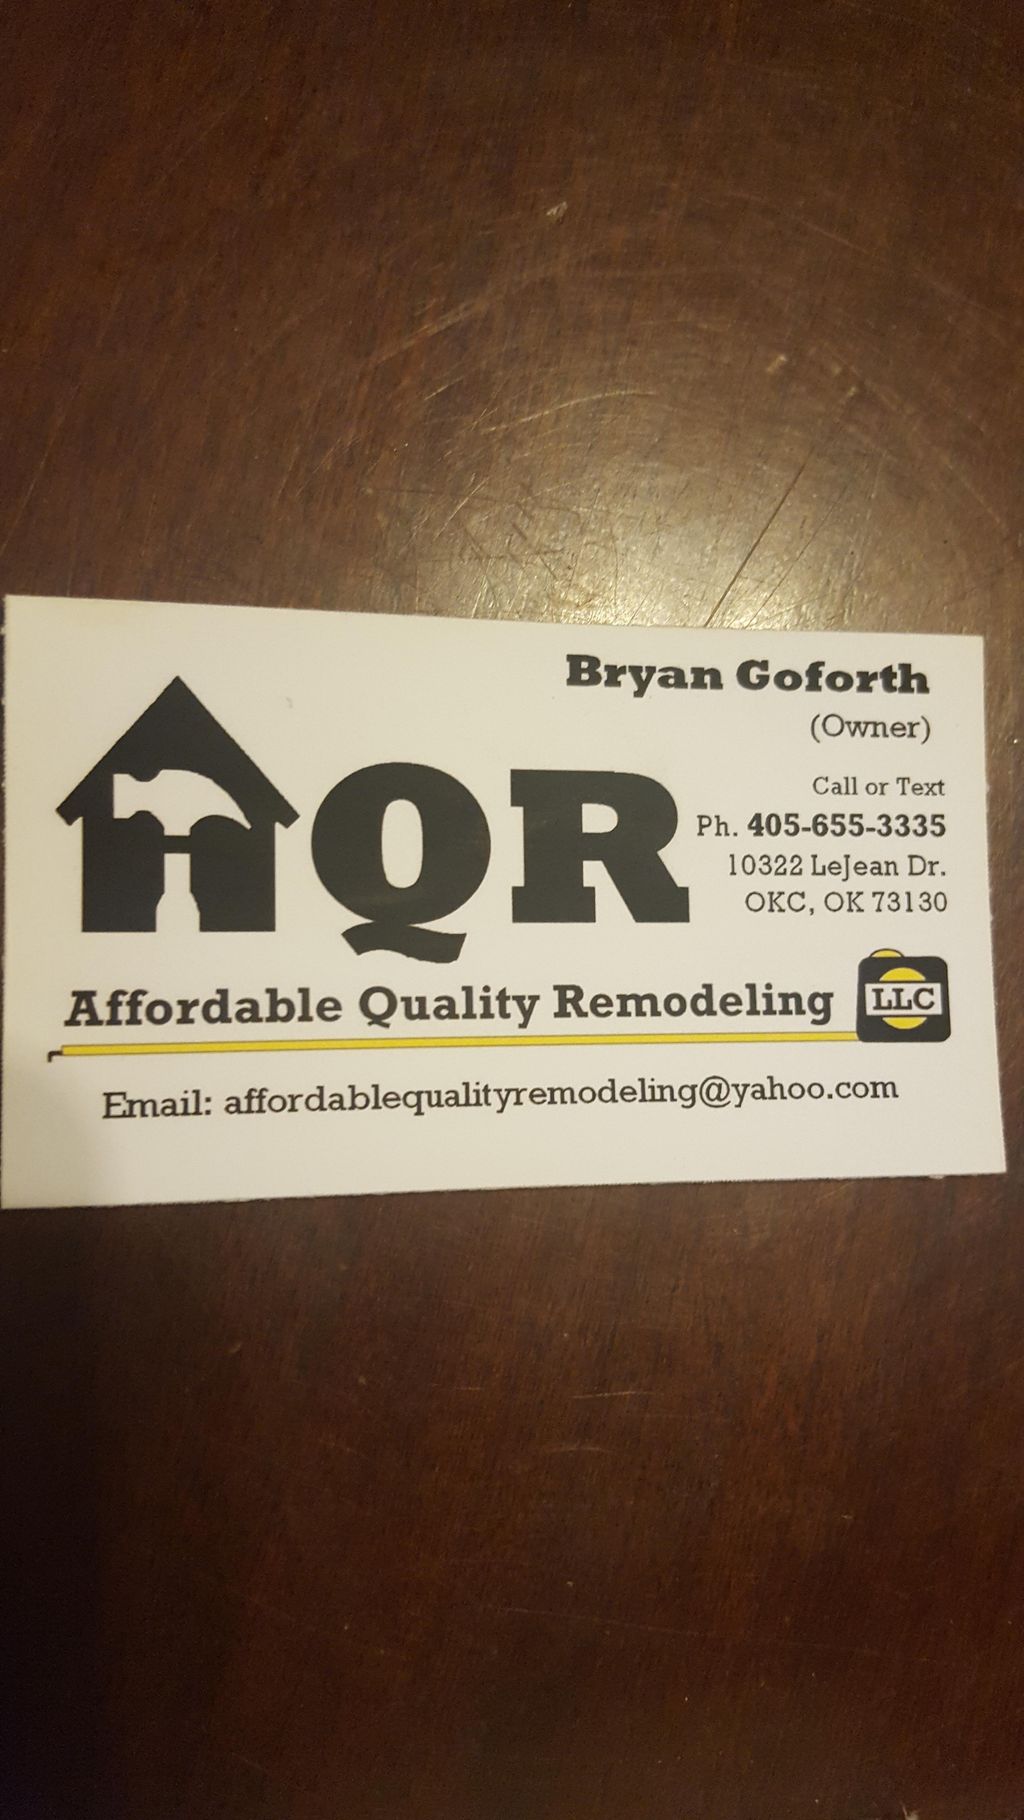 Affordable Quality Remodeling LLC